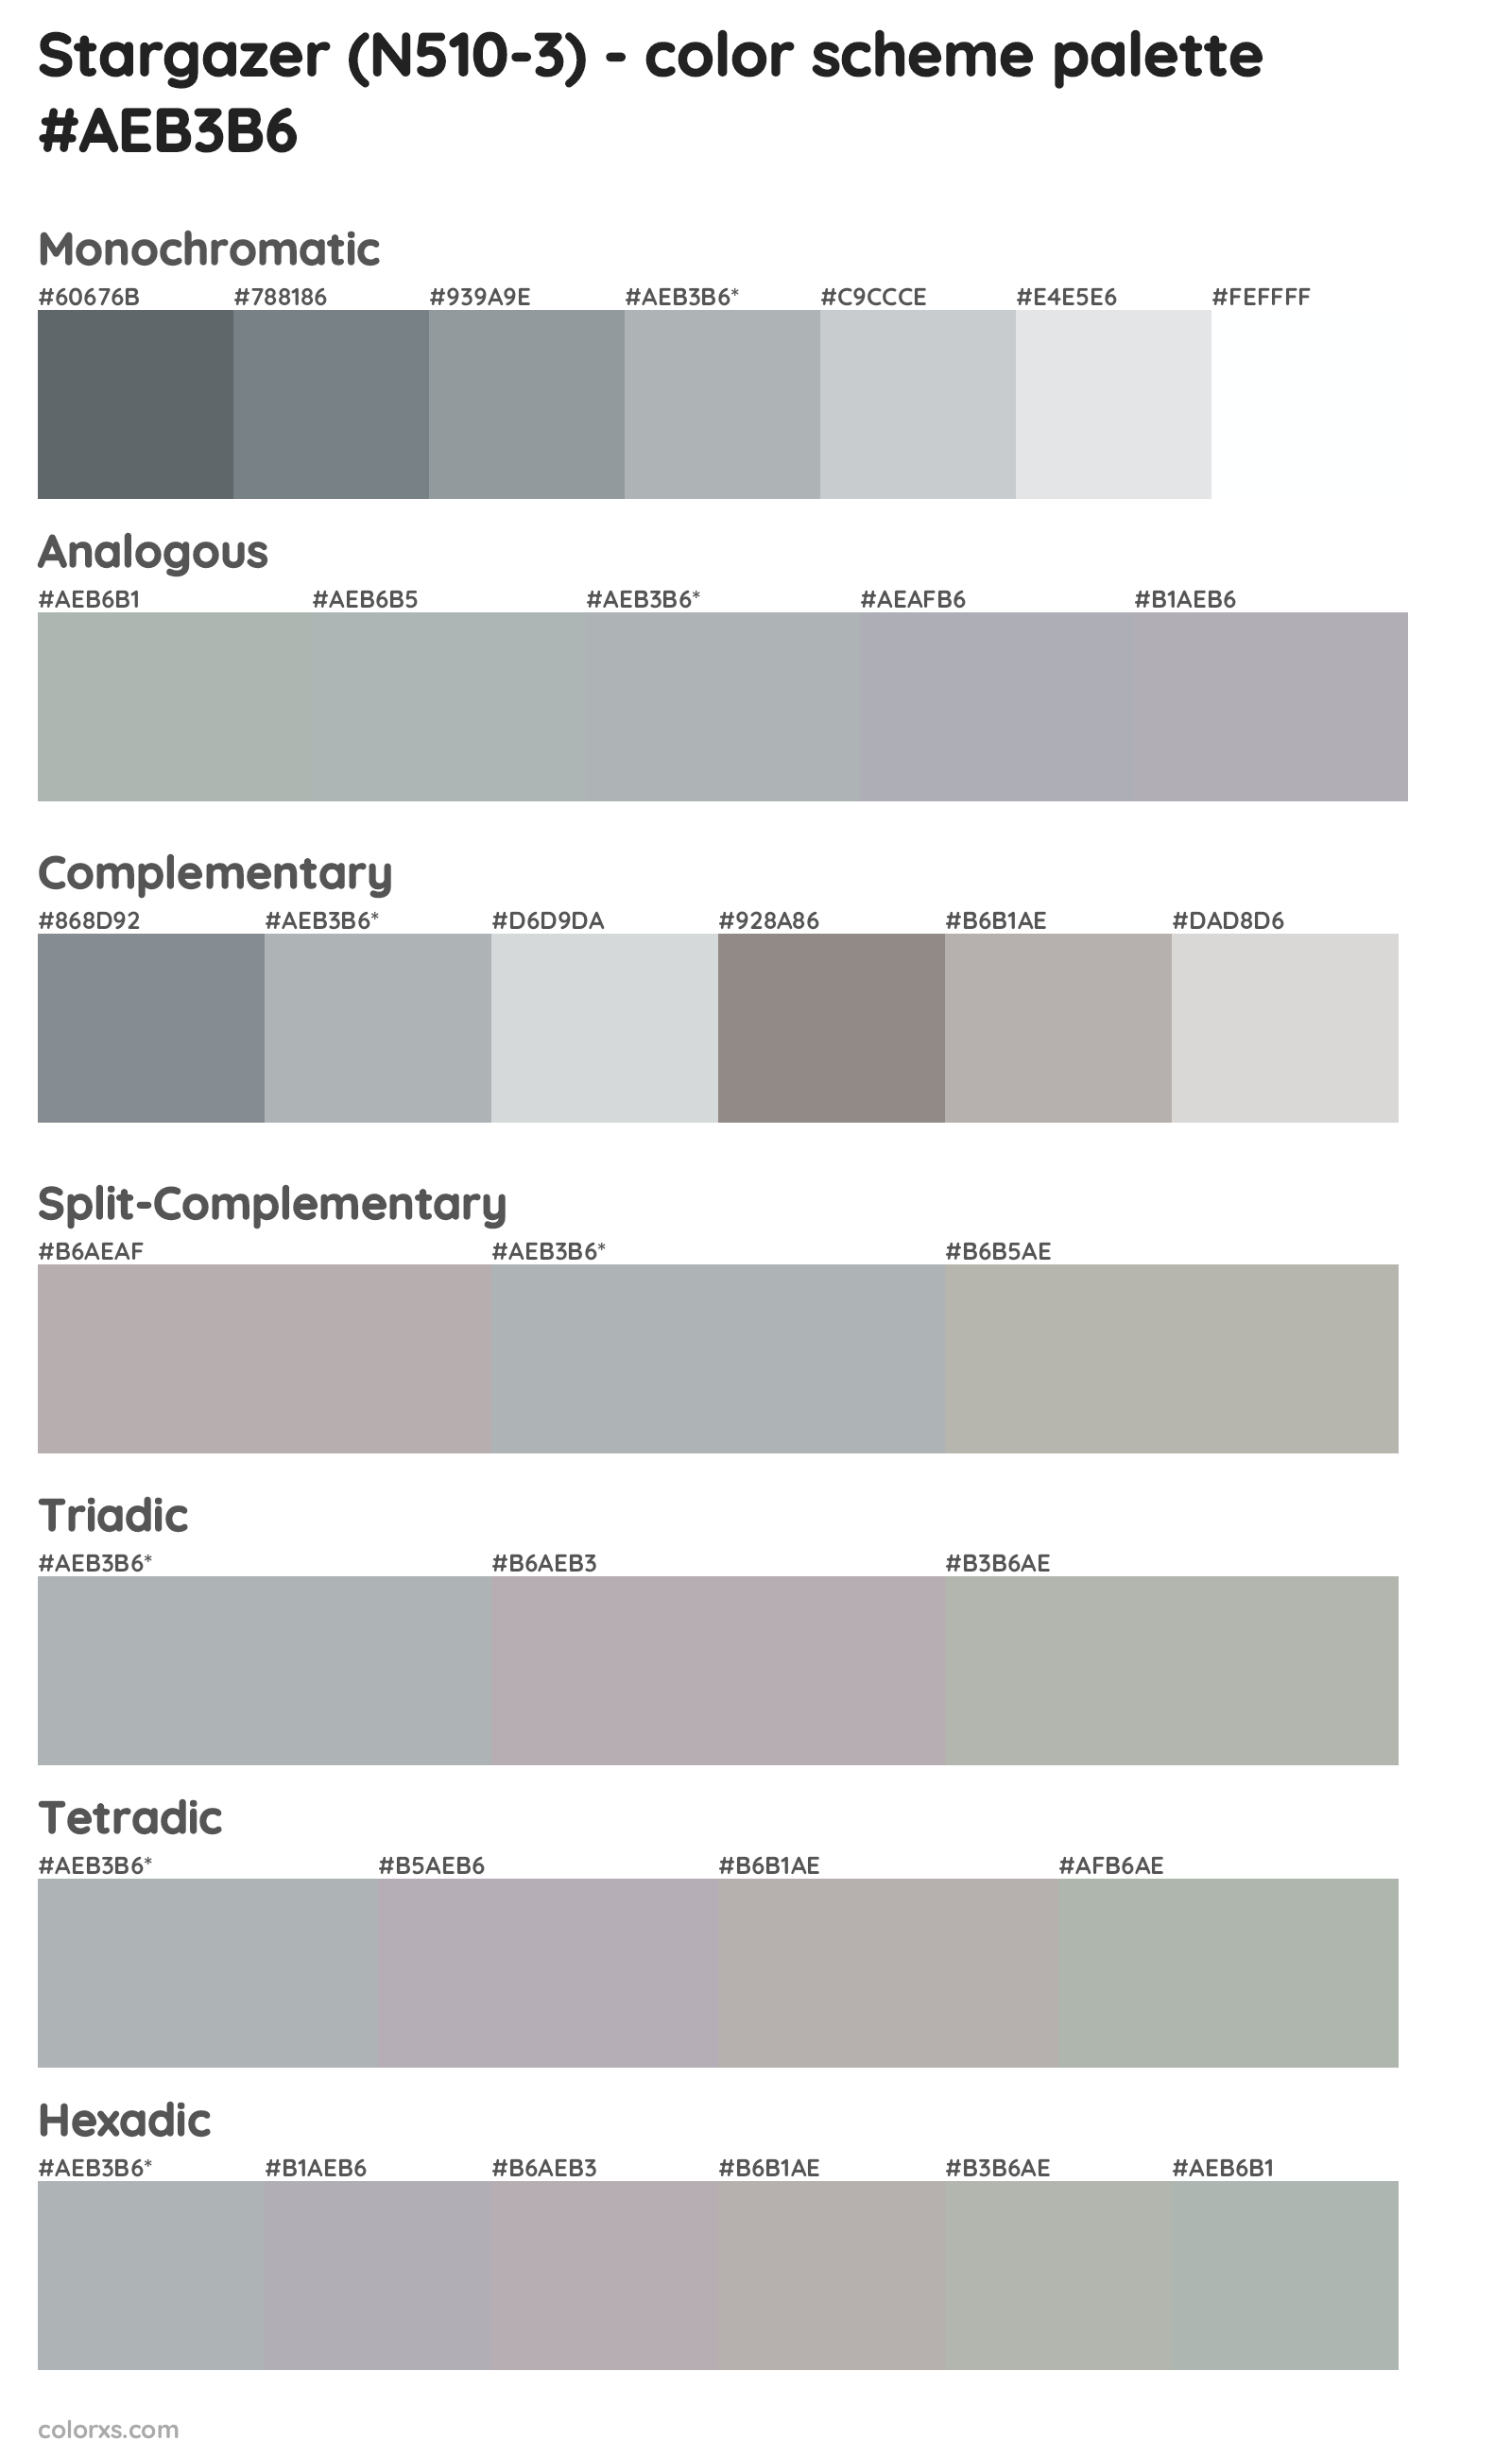 Stargazer (N510-3) Color Scheme Palettes